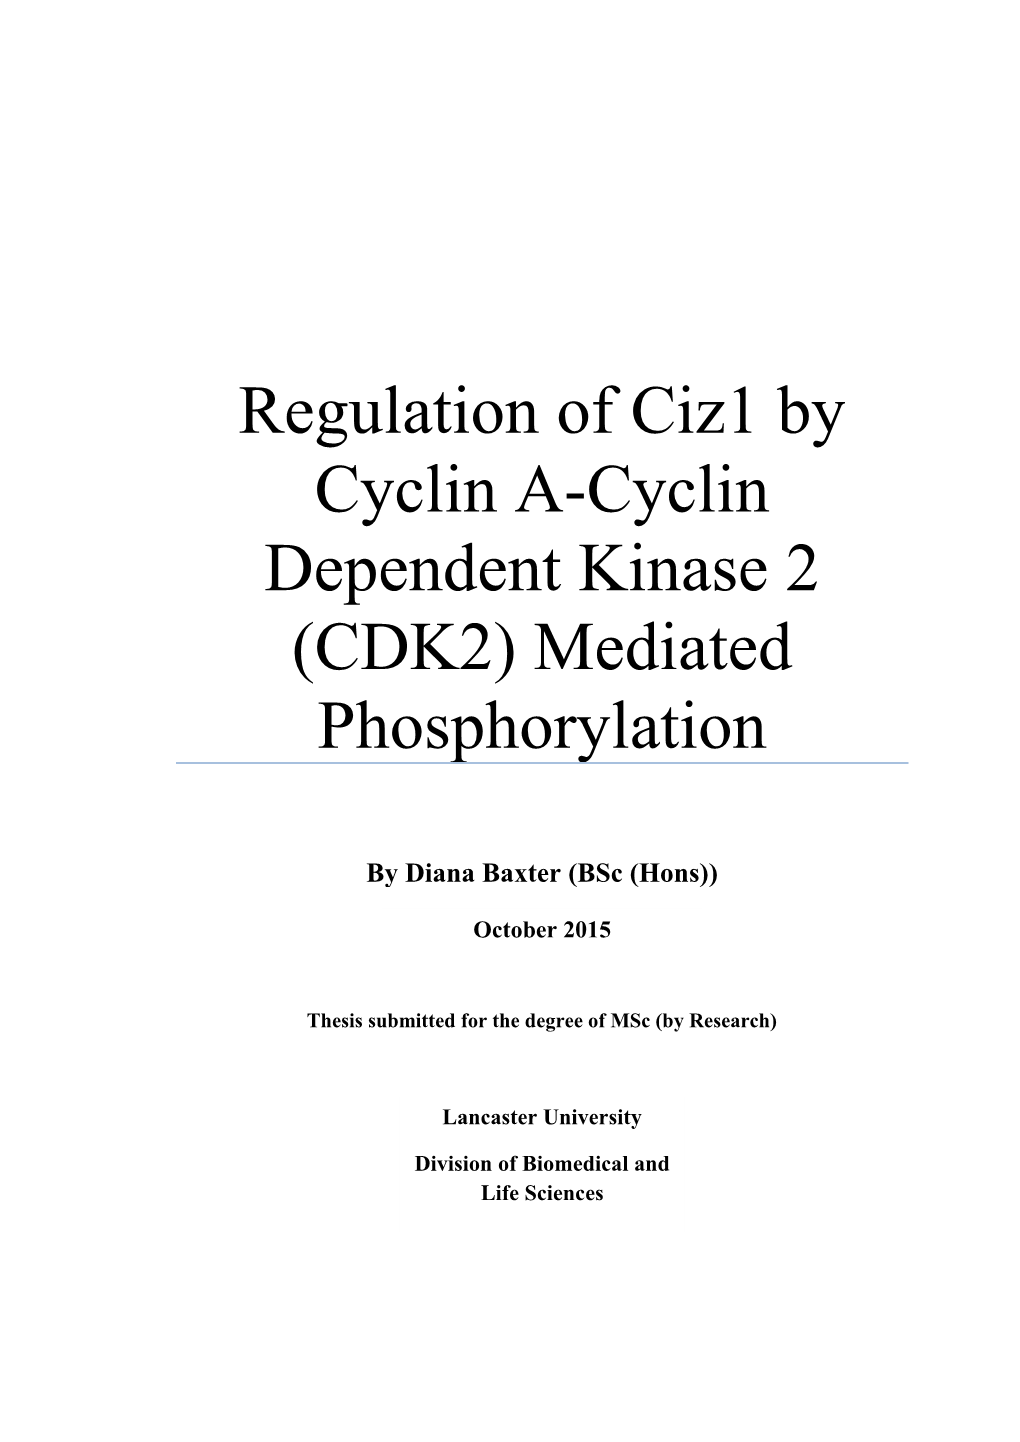 Ciz1 by Cyclin A-Cyclin Dependent Kinase 2 (CDK2) Mediated Phosphorylation